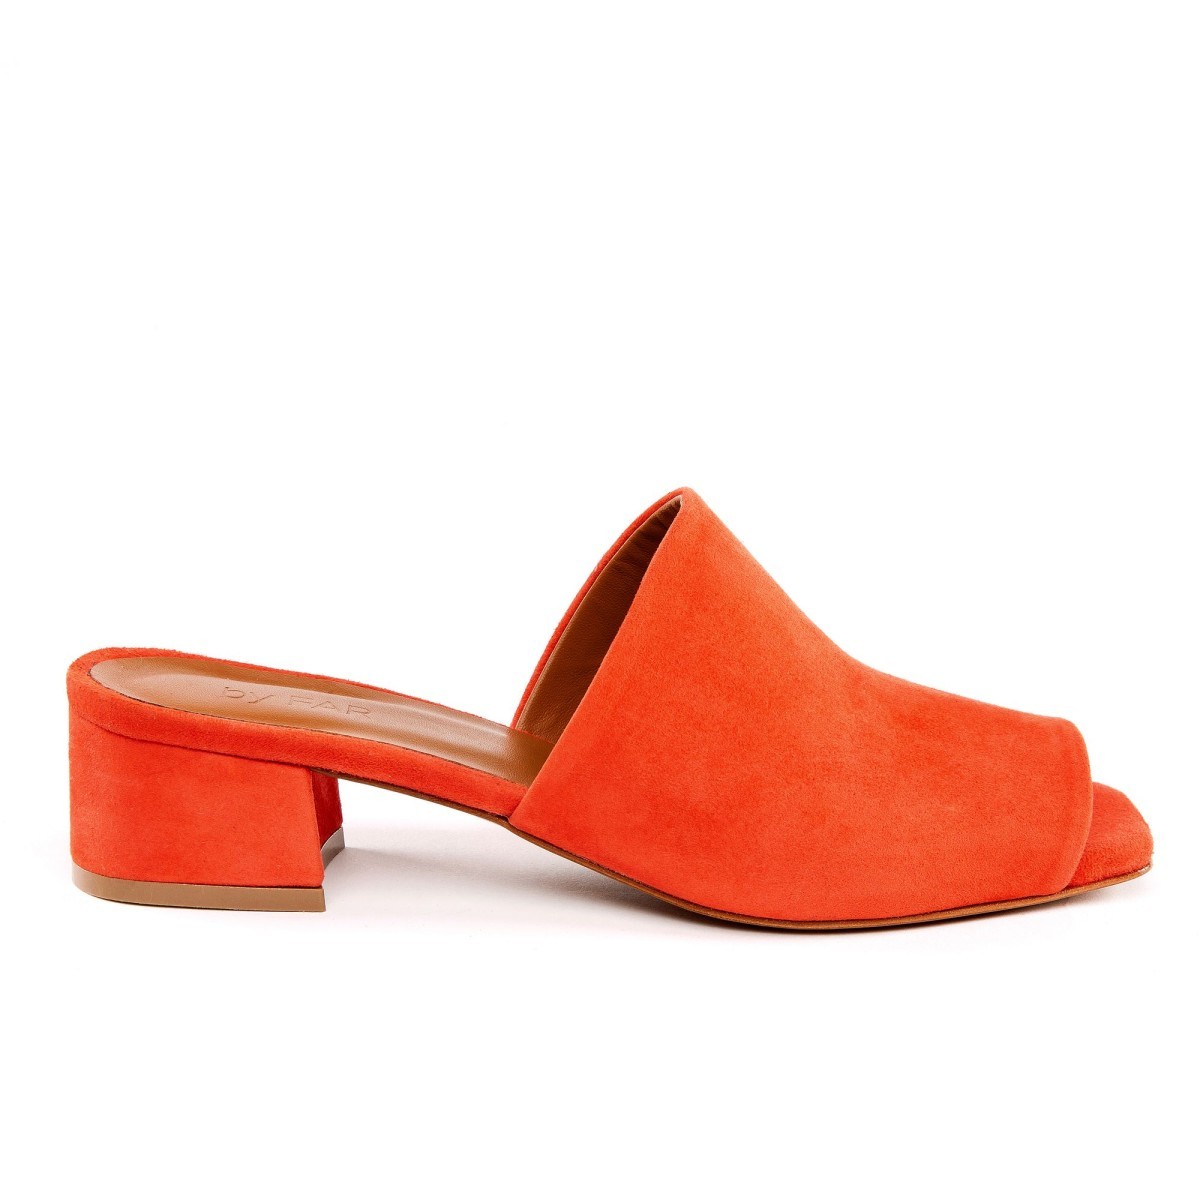 Mules en color naranja de By Far Shoes. 248 euros.